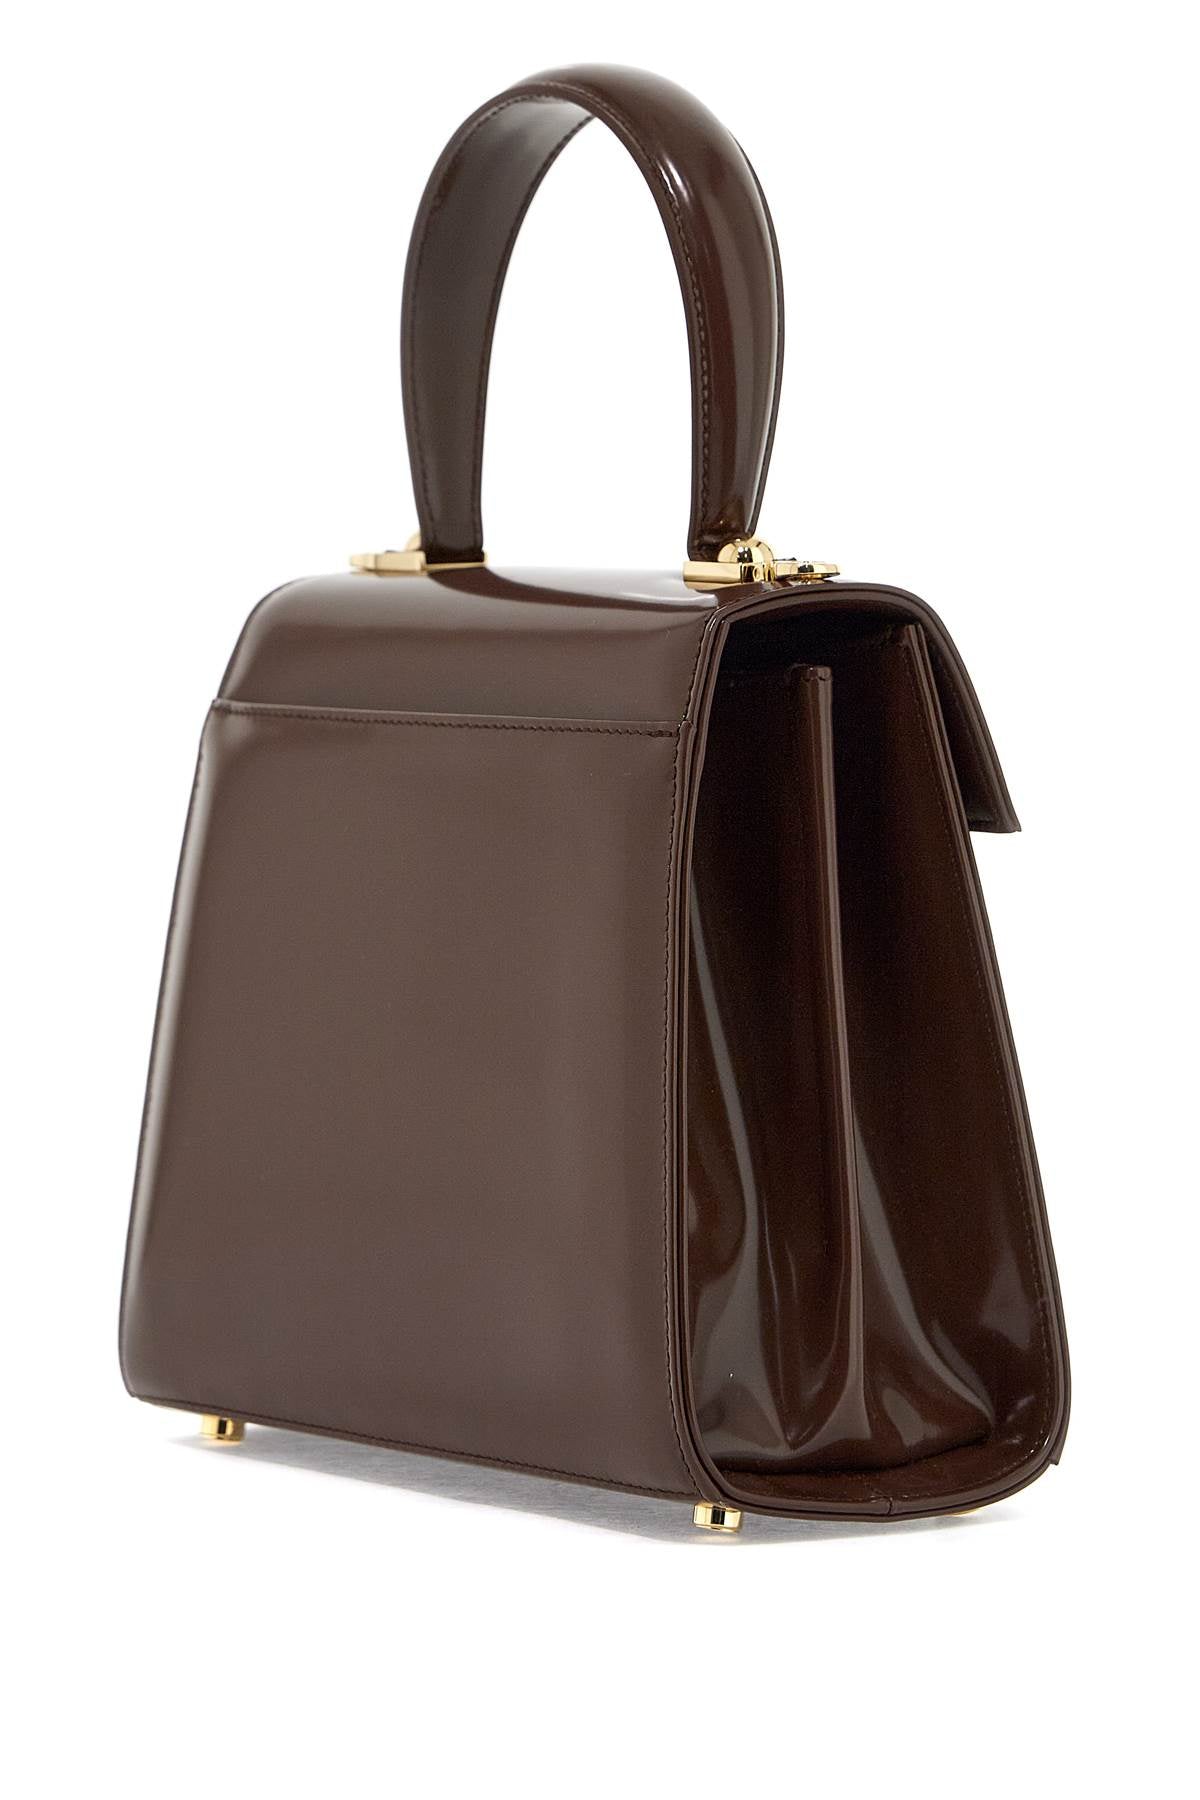 FERRAGAMO Iconic Top Handle Handbag (S) in Brown for Women - FW24 Collection